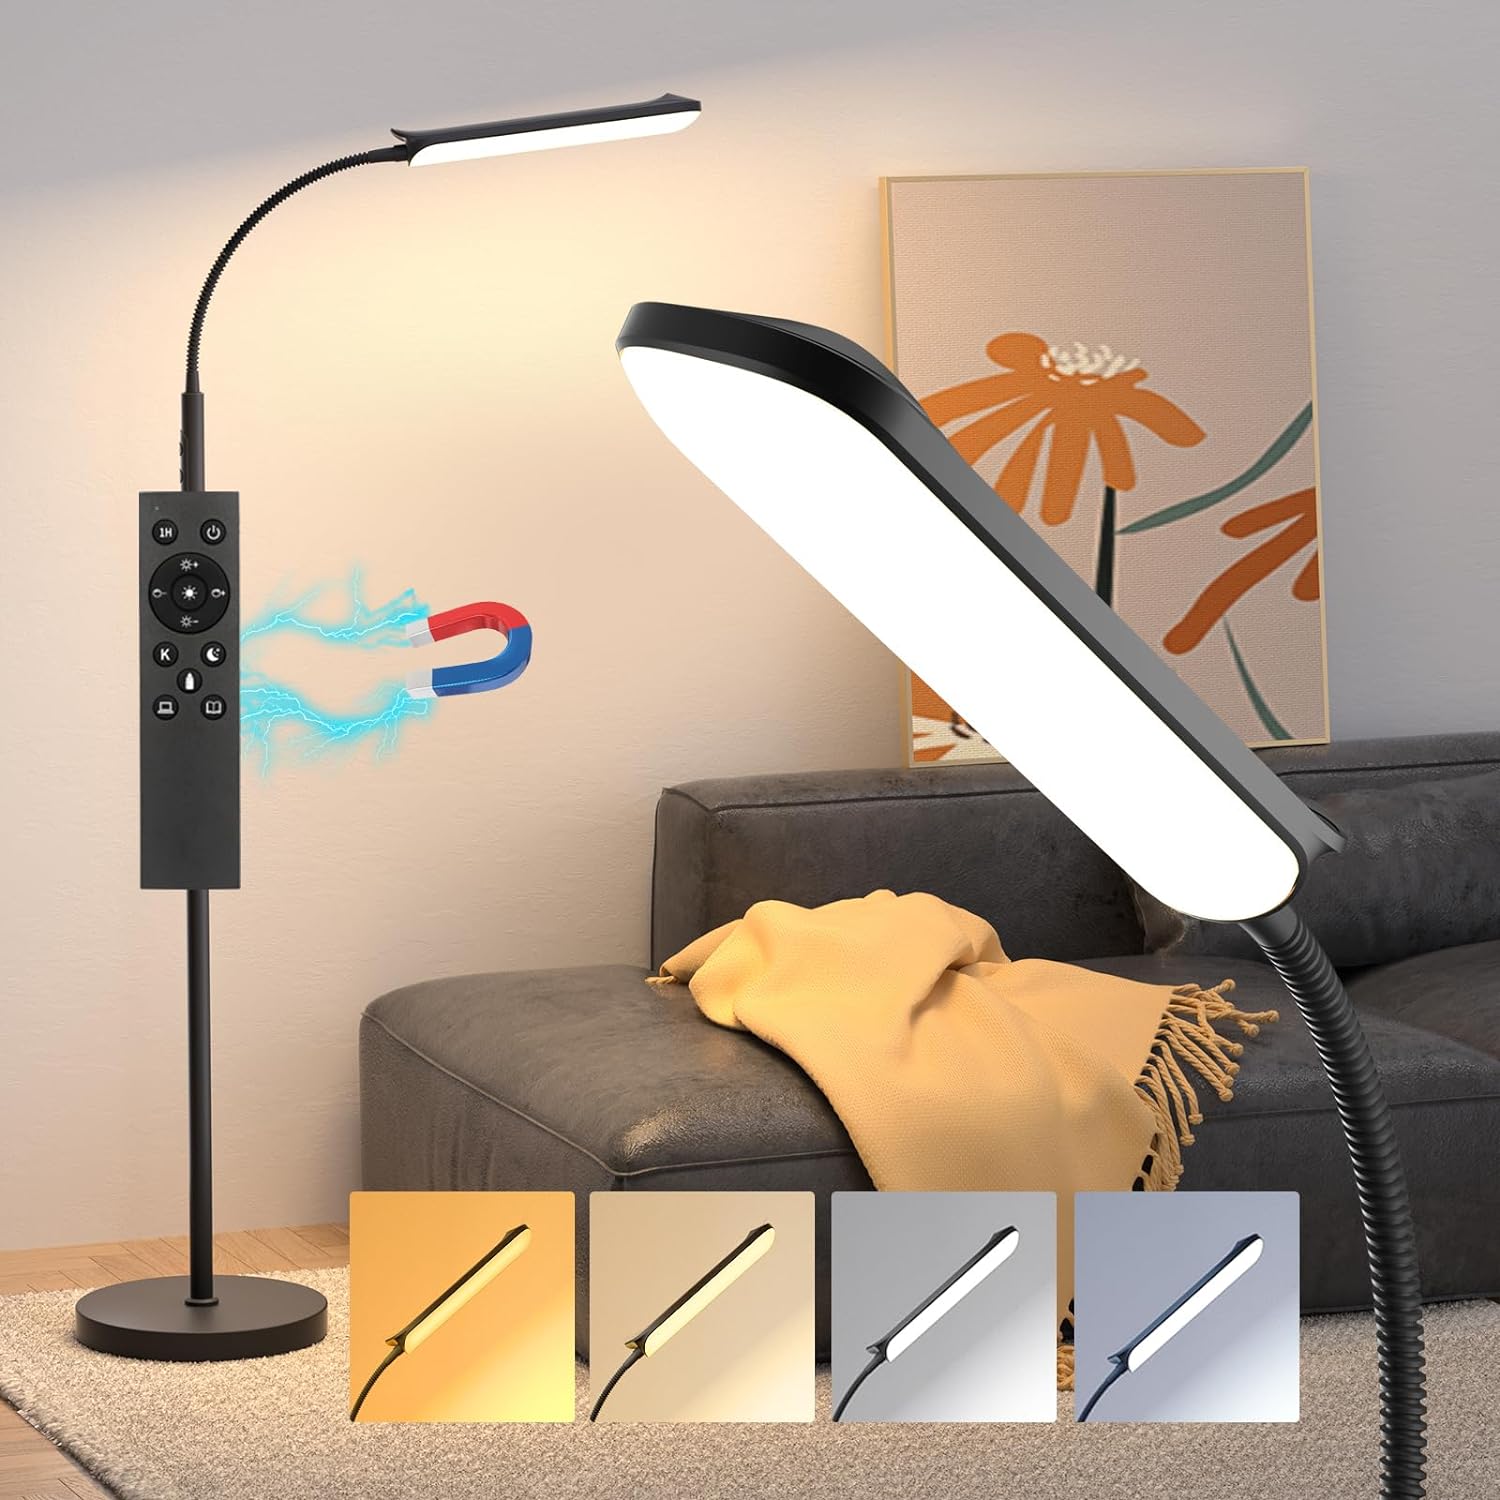 LED Floor Lamp, 18W, Adjustable Stepless Colors & Brightness Gooseneck Standing Lamp - $19.99